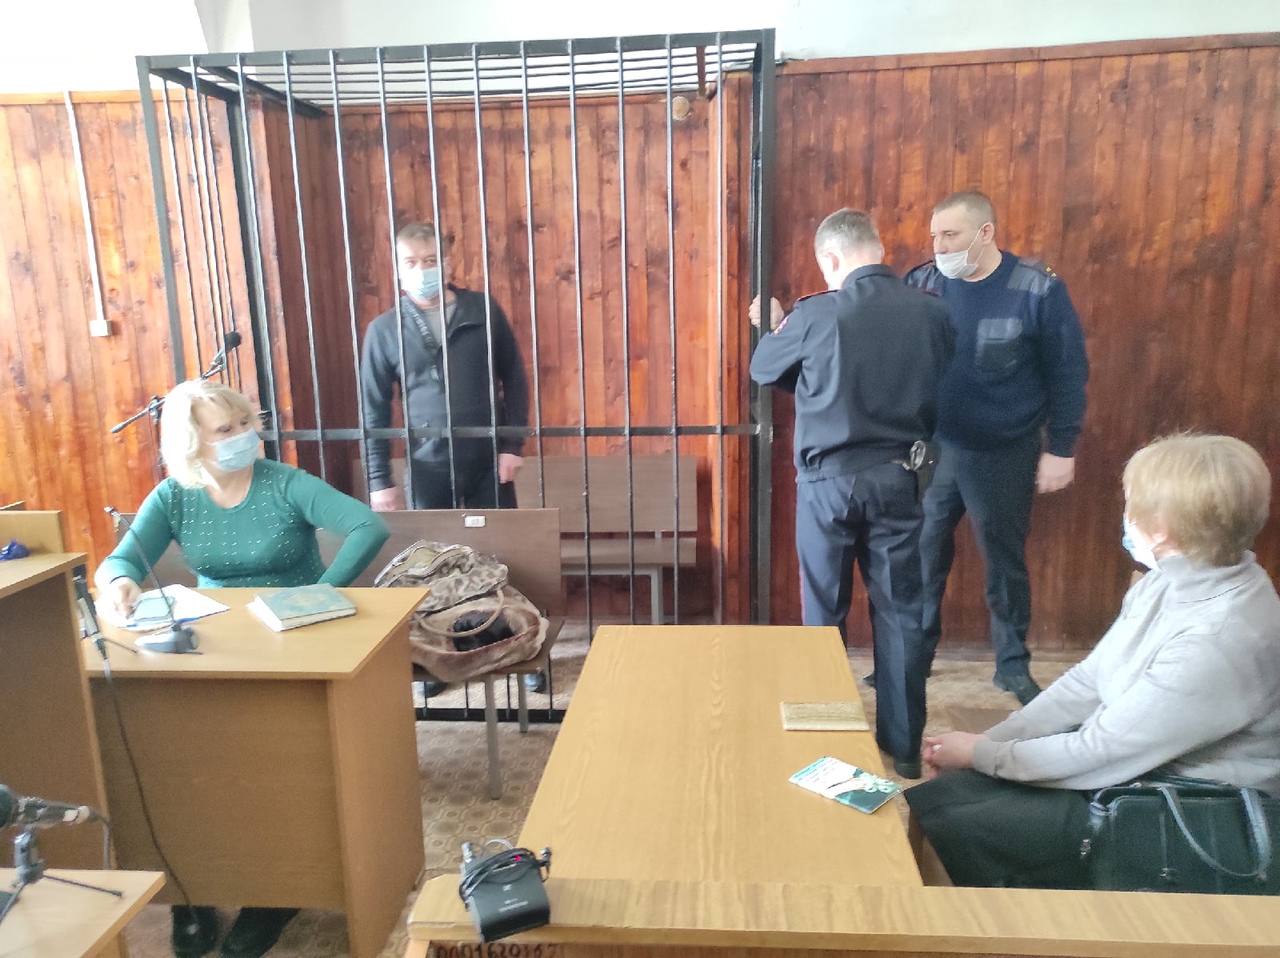 Закончился ли суд над бишембаевым